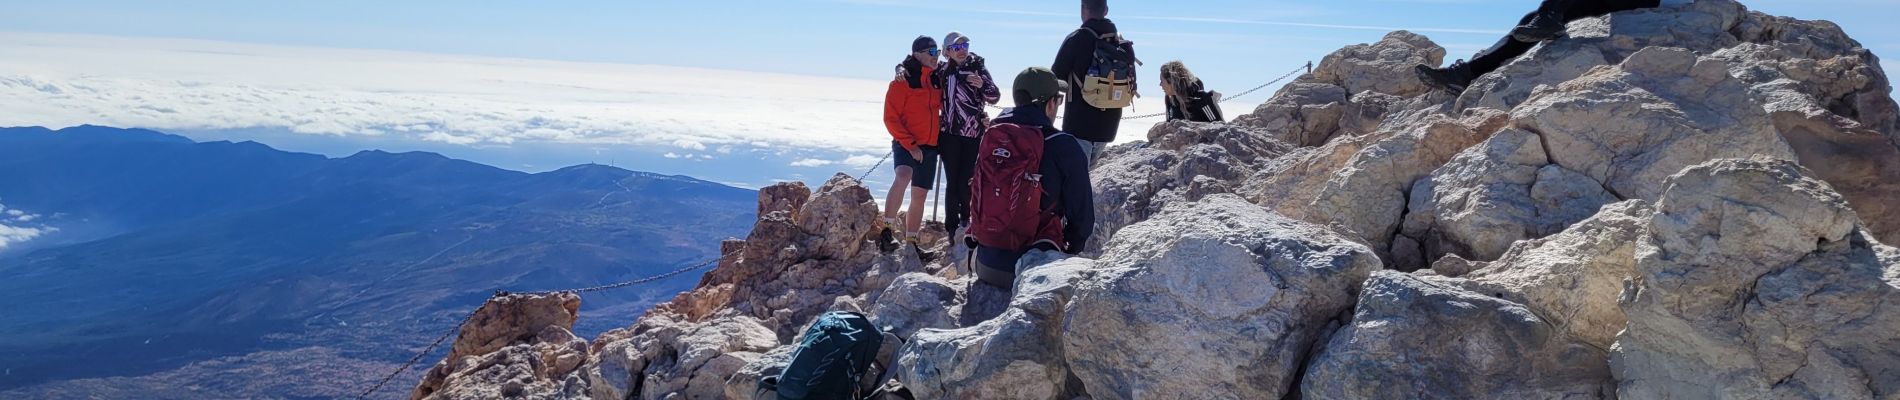 Tour Wandern La Orotava - Sommet du Teide - Photo